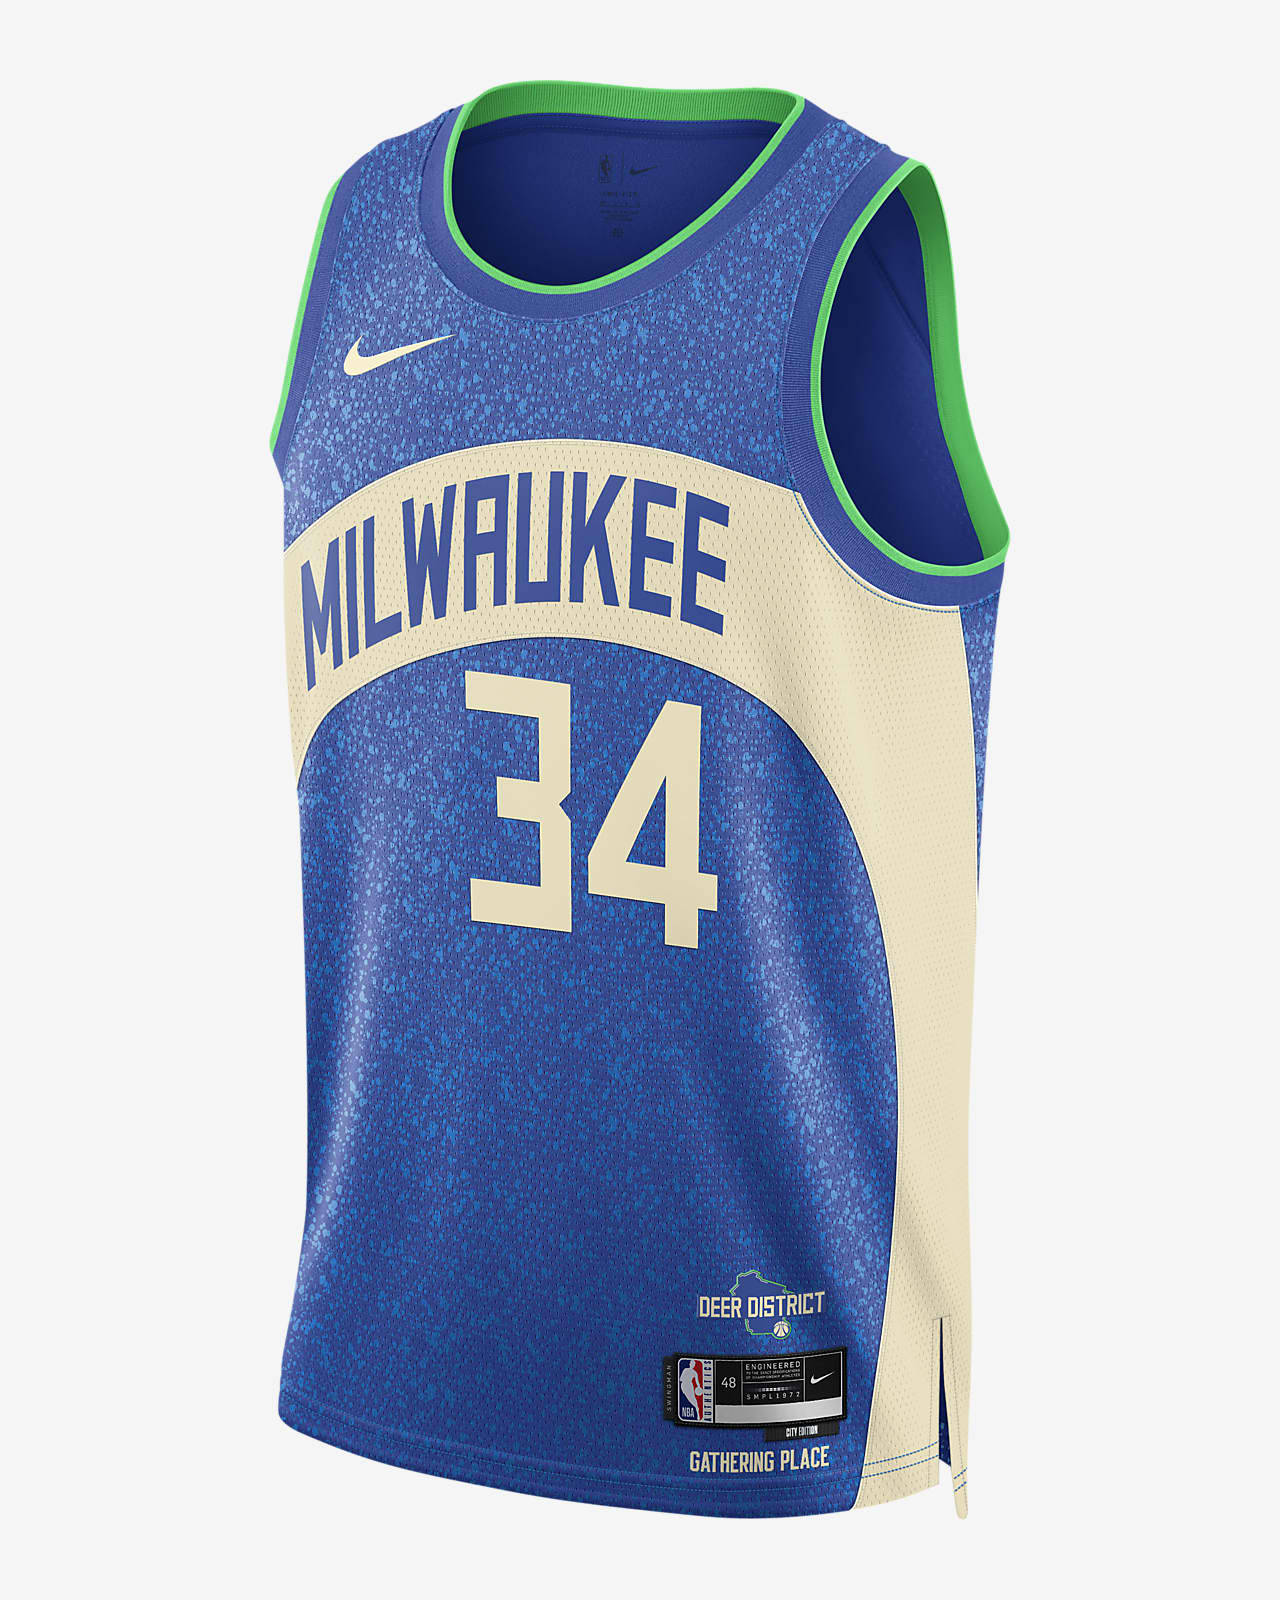 Milwaukee Bucks Collection. NBA Clothing & Basketball Accessories